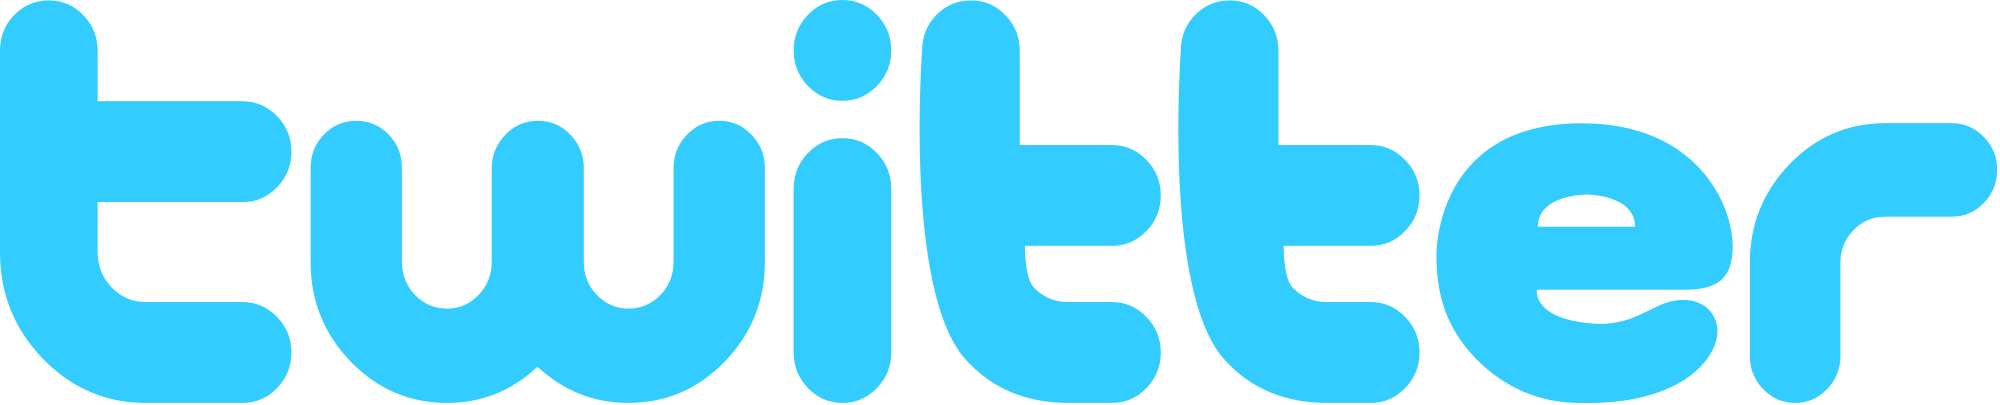 2000px Twitter Logo - Vimeo Logo Png (2000x405), Png Download